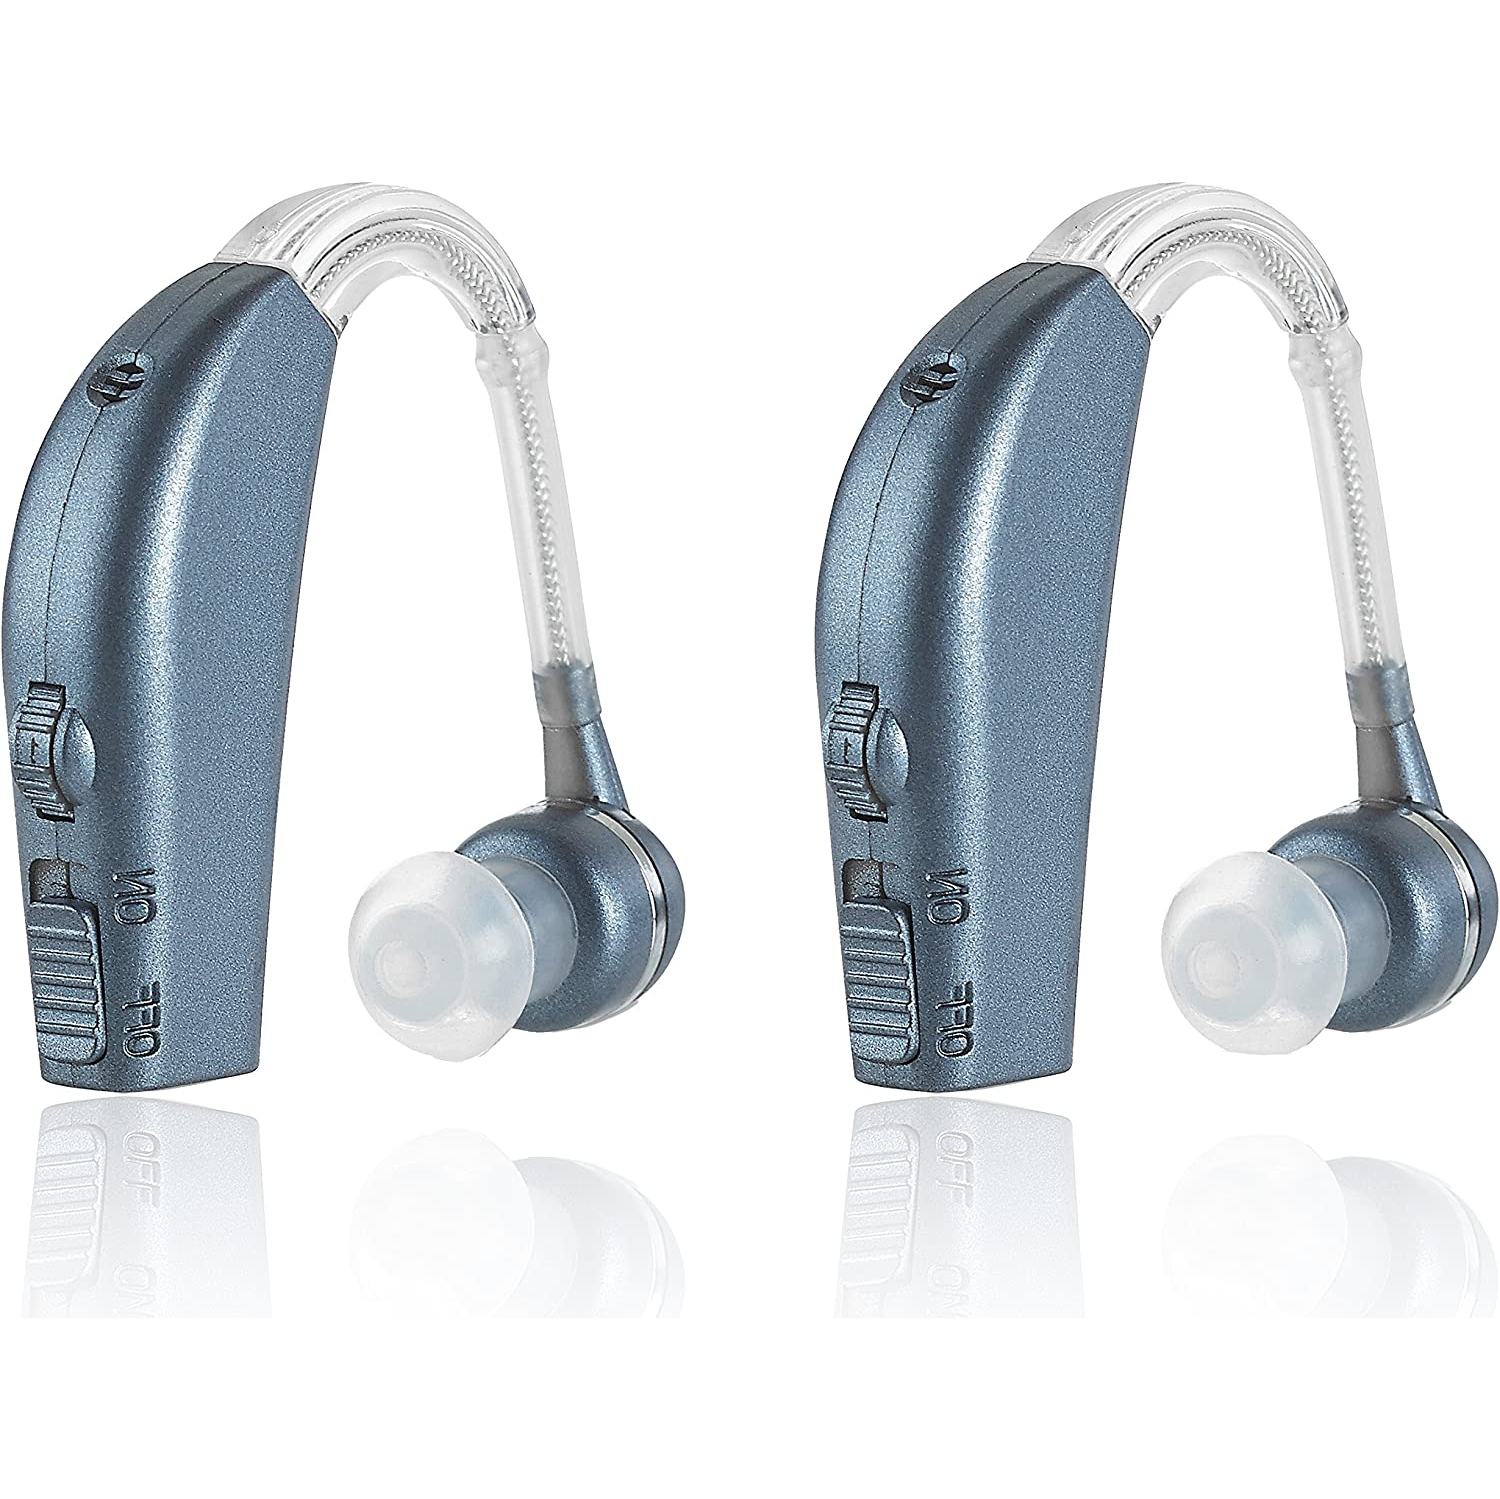 Digital Hearing Amplifier - Personal Hearing Enhancement Sound Amplifier Pair, Rechargeable Digital Hearing Amplifier with All-Day Battery Life, Modern Blue